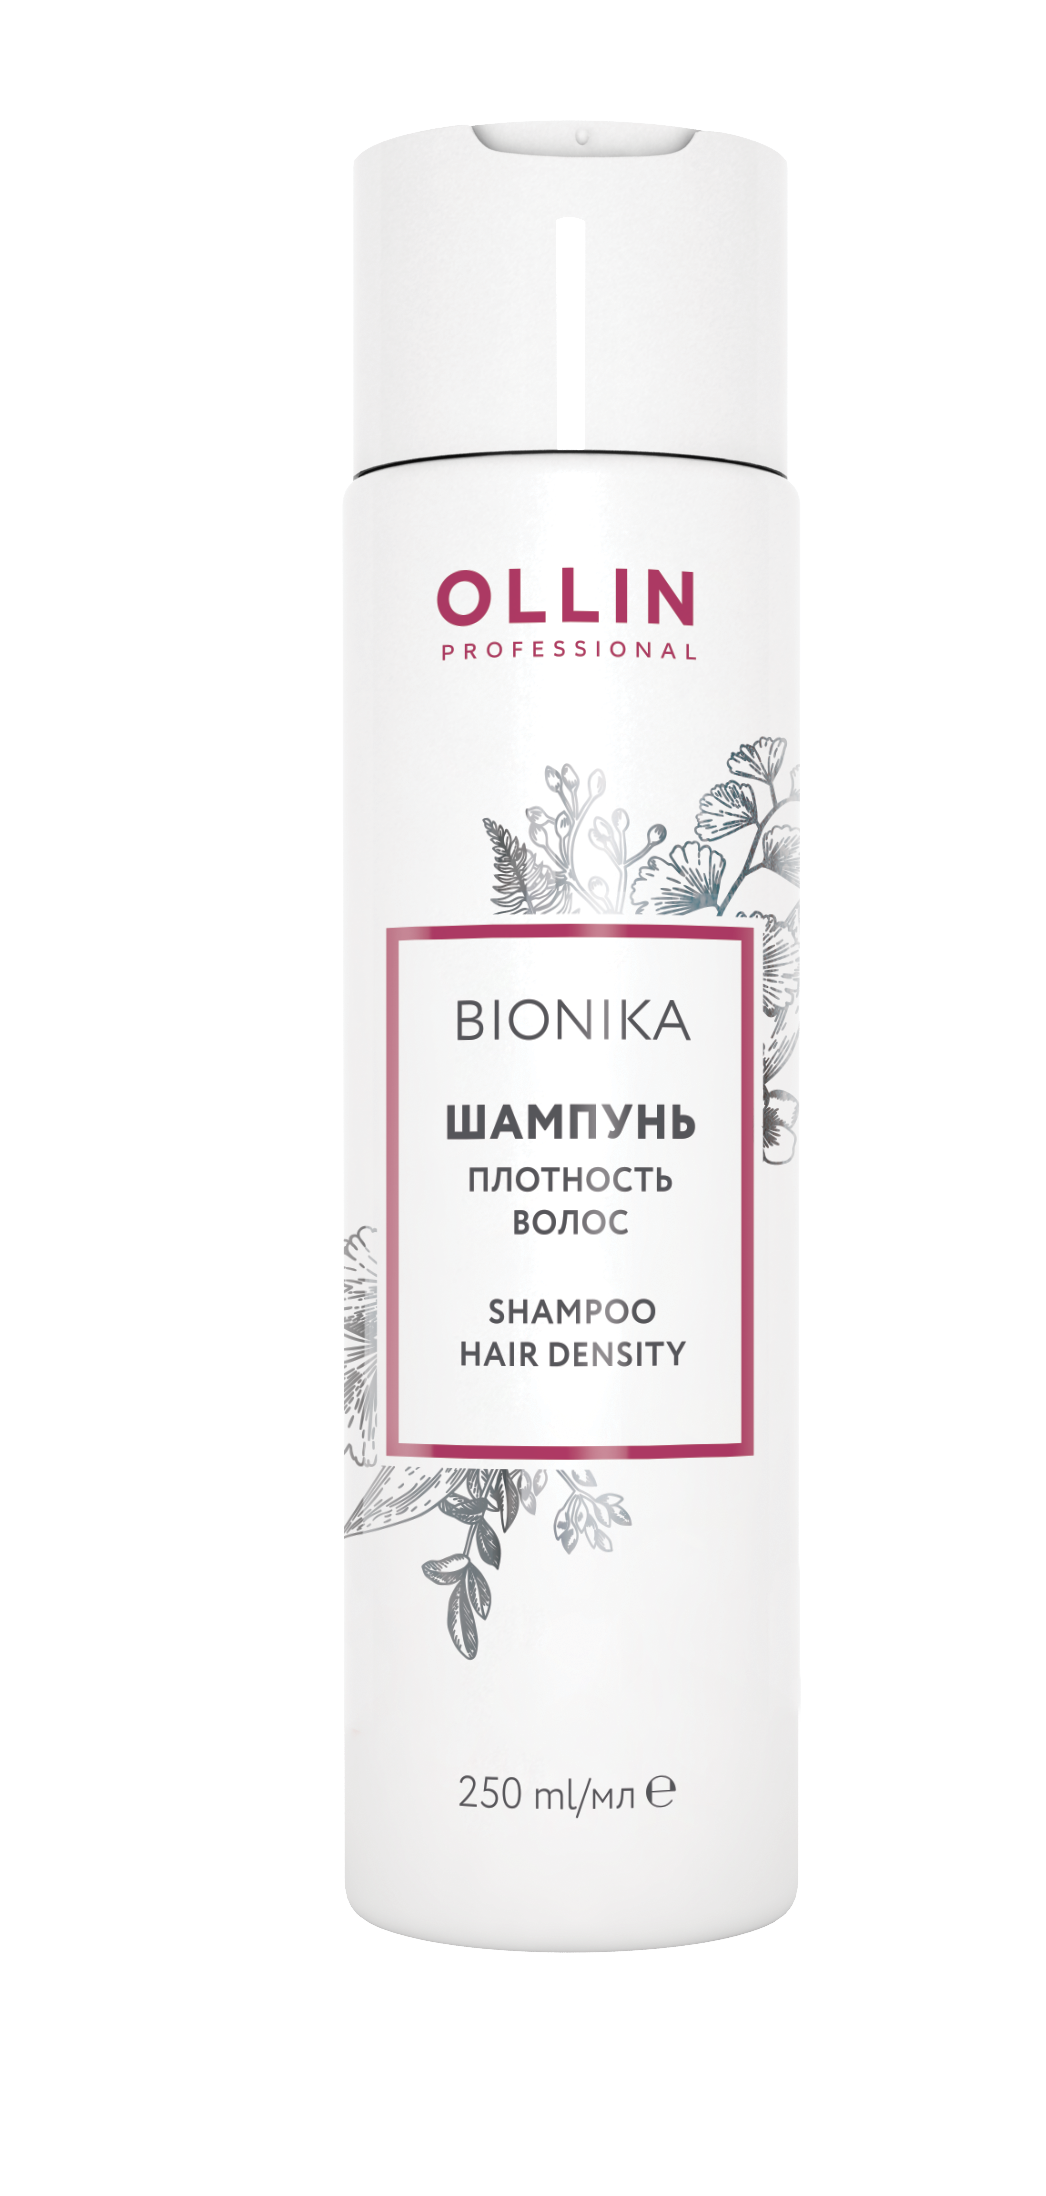 OLLIN BioNika Шампунь "Плотность волос" 250 мл 